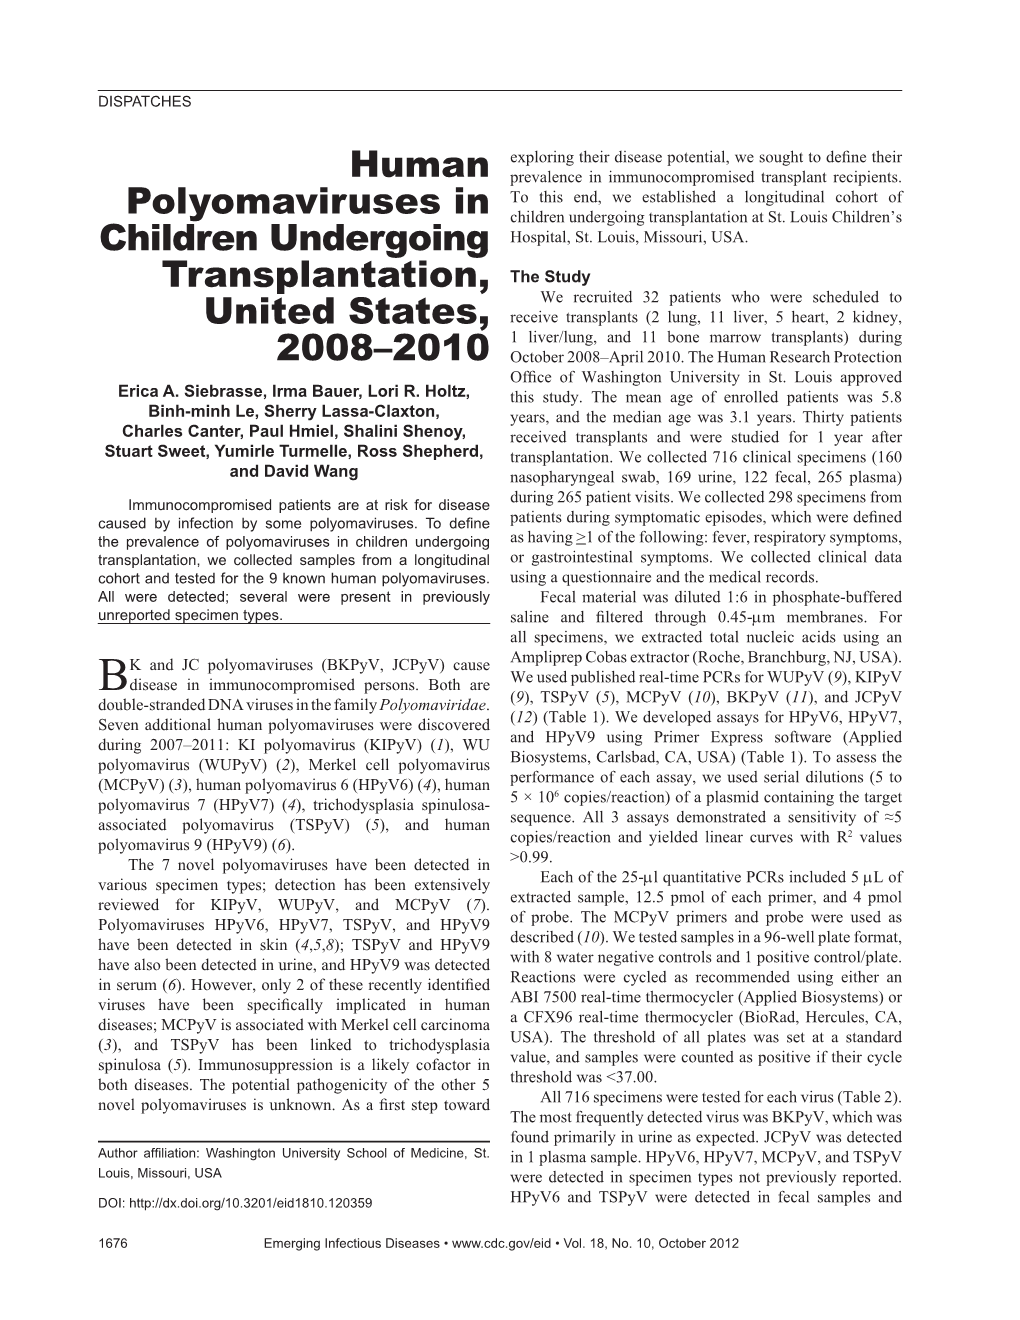 Human Polyomaviruses in Children Undergoing Transplantation, United